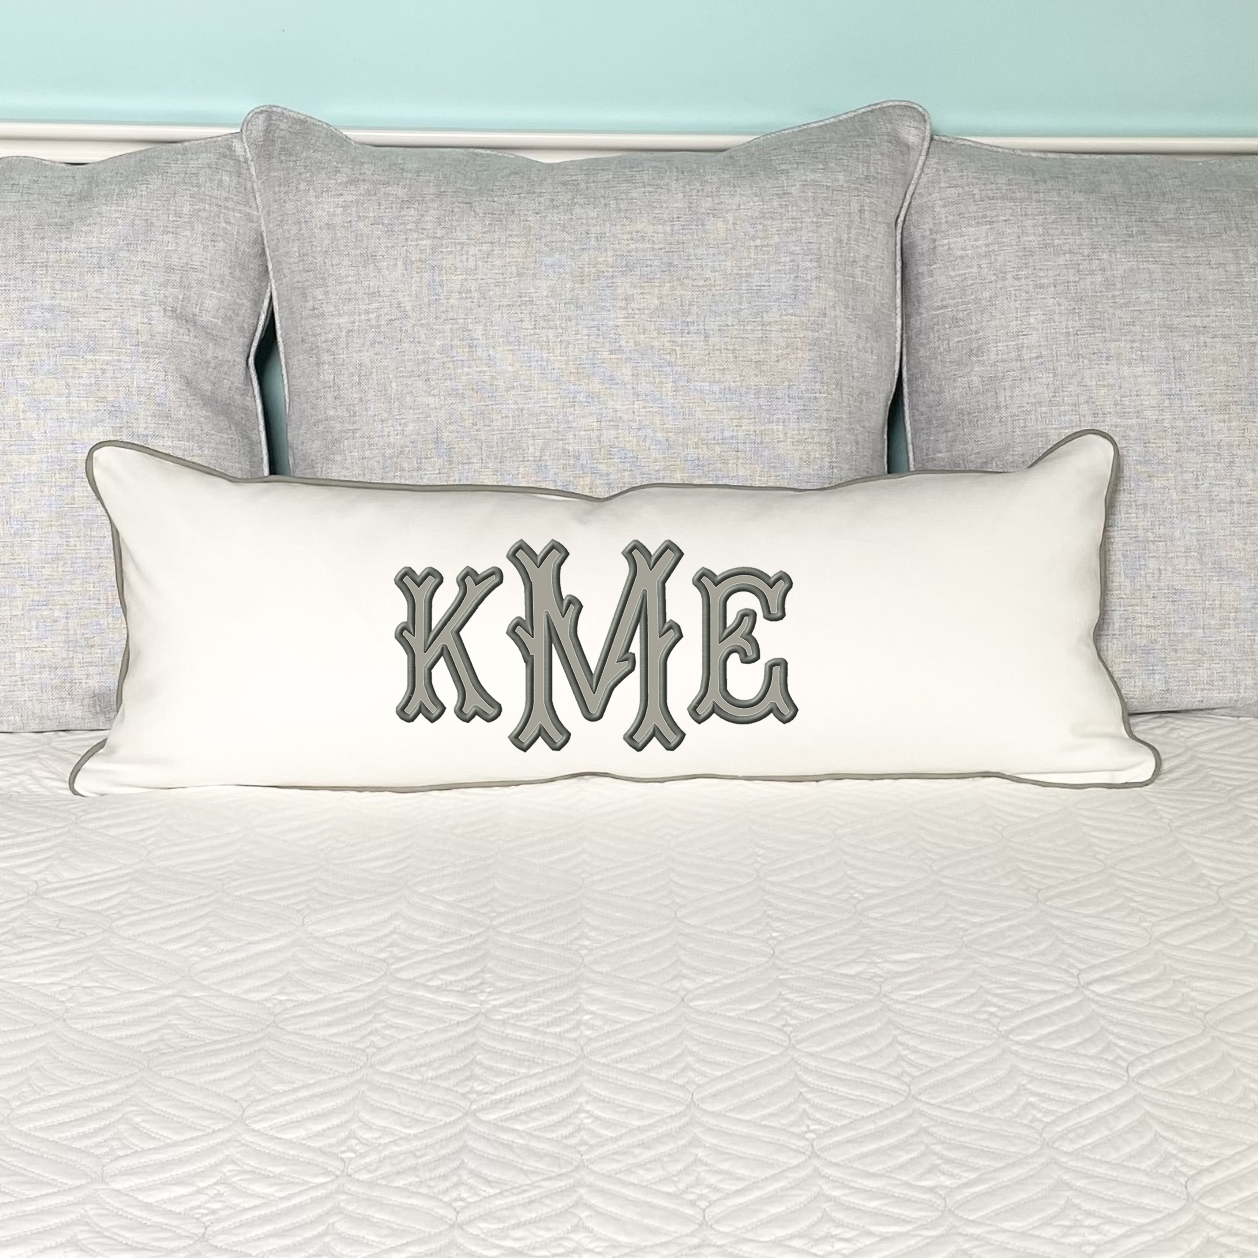 Large Monogram Applique Pillow Cover-embroidered Pillow-personalized Pillow- large Lumbar Pillow-queen/king Bed Pillow-accent Pillow 